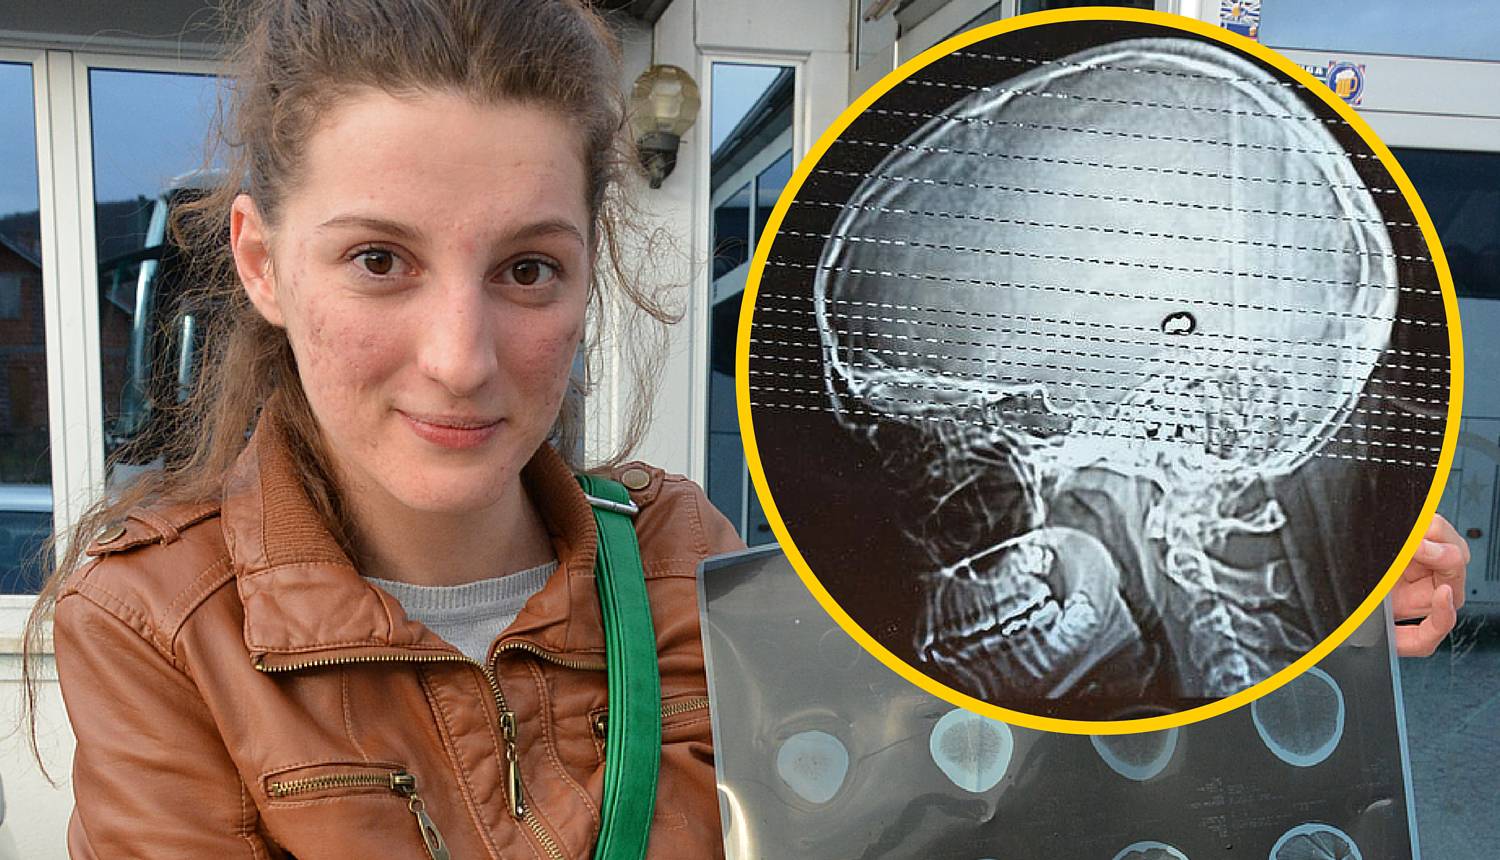 Ona živi s metkom u mozgu: 'Krv mi je tekla iz nosa i usta'